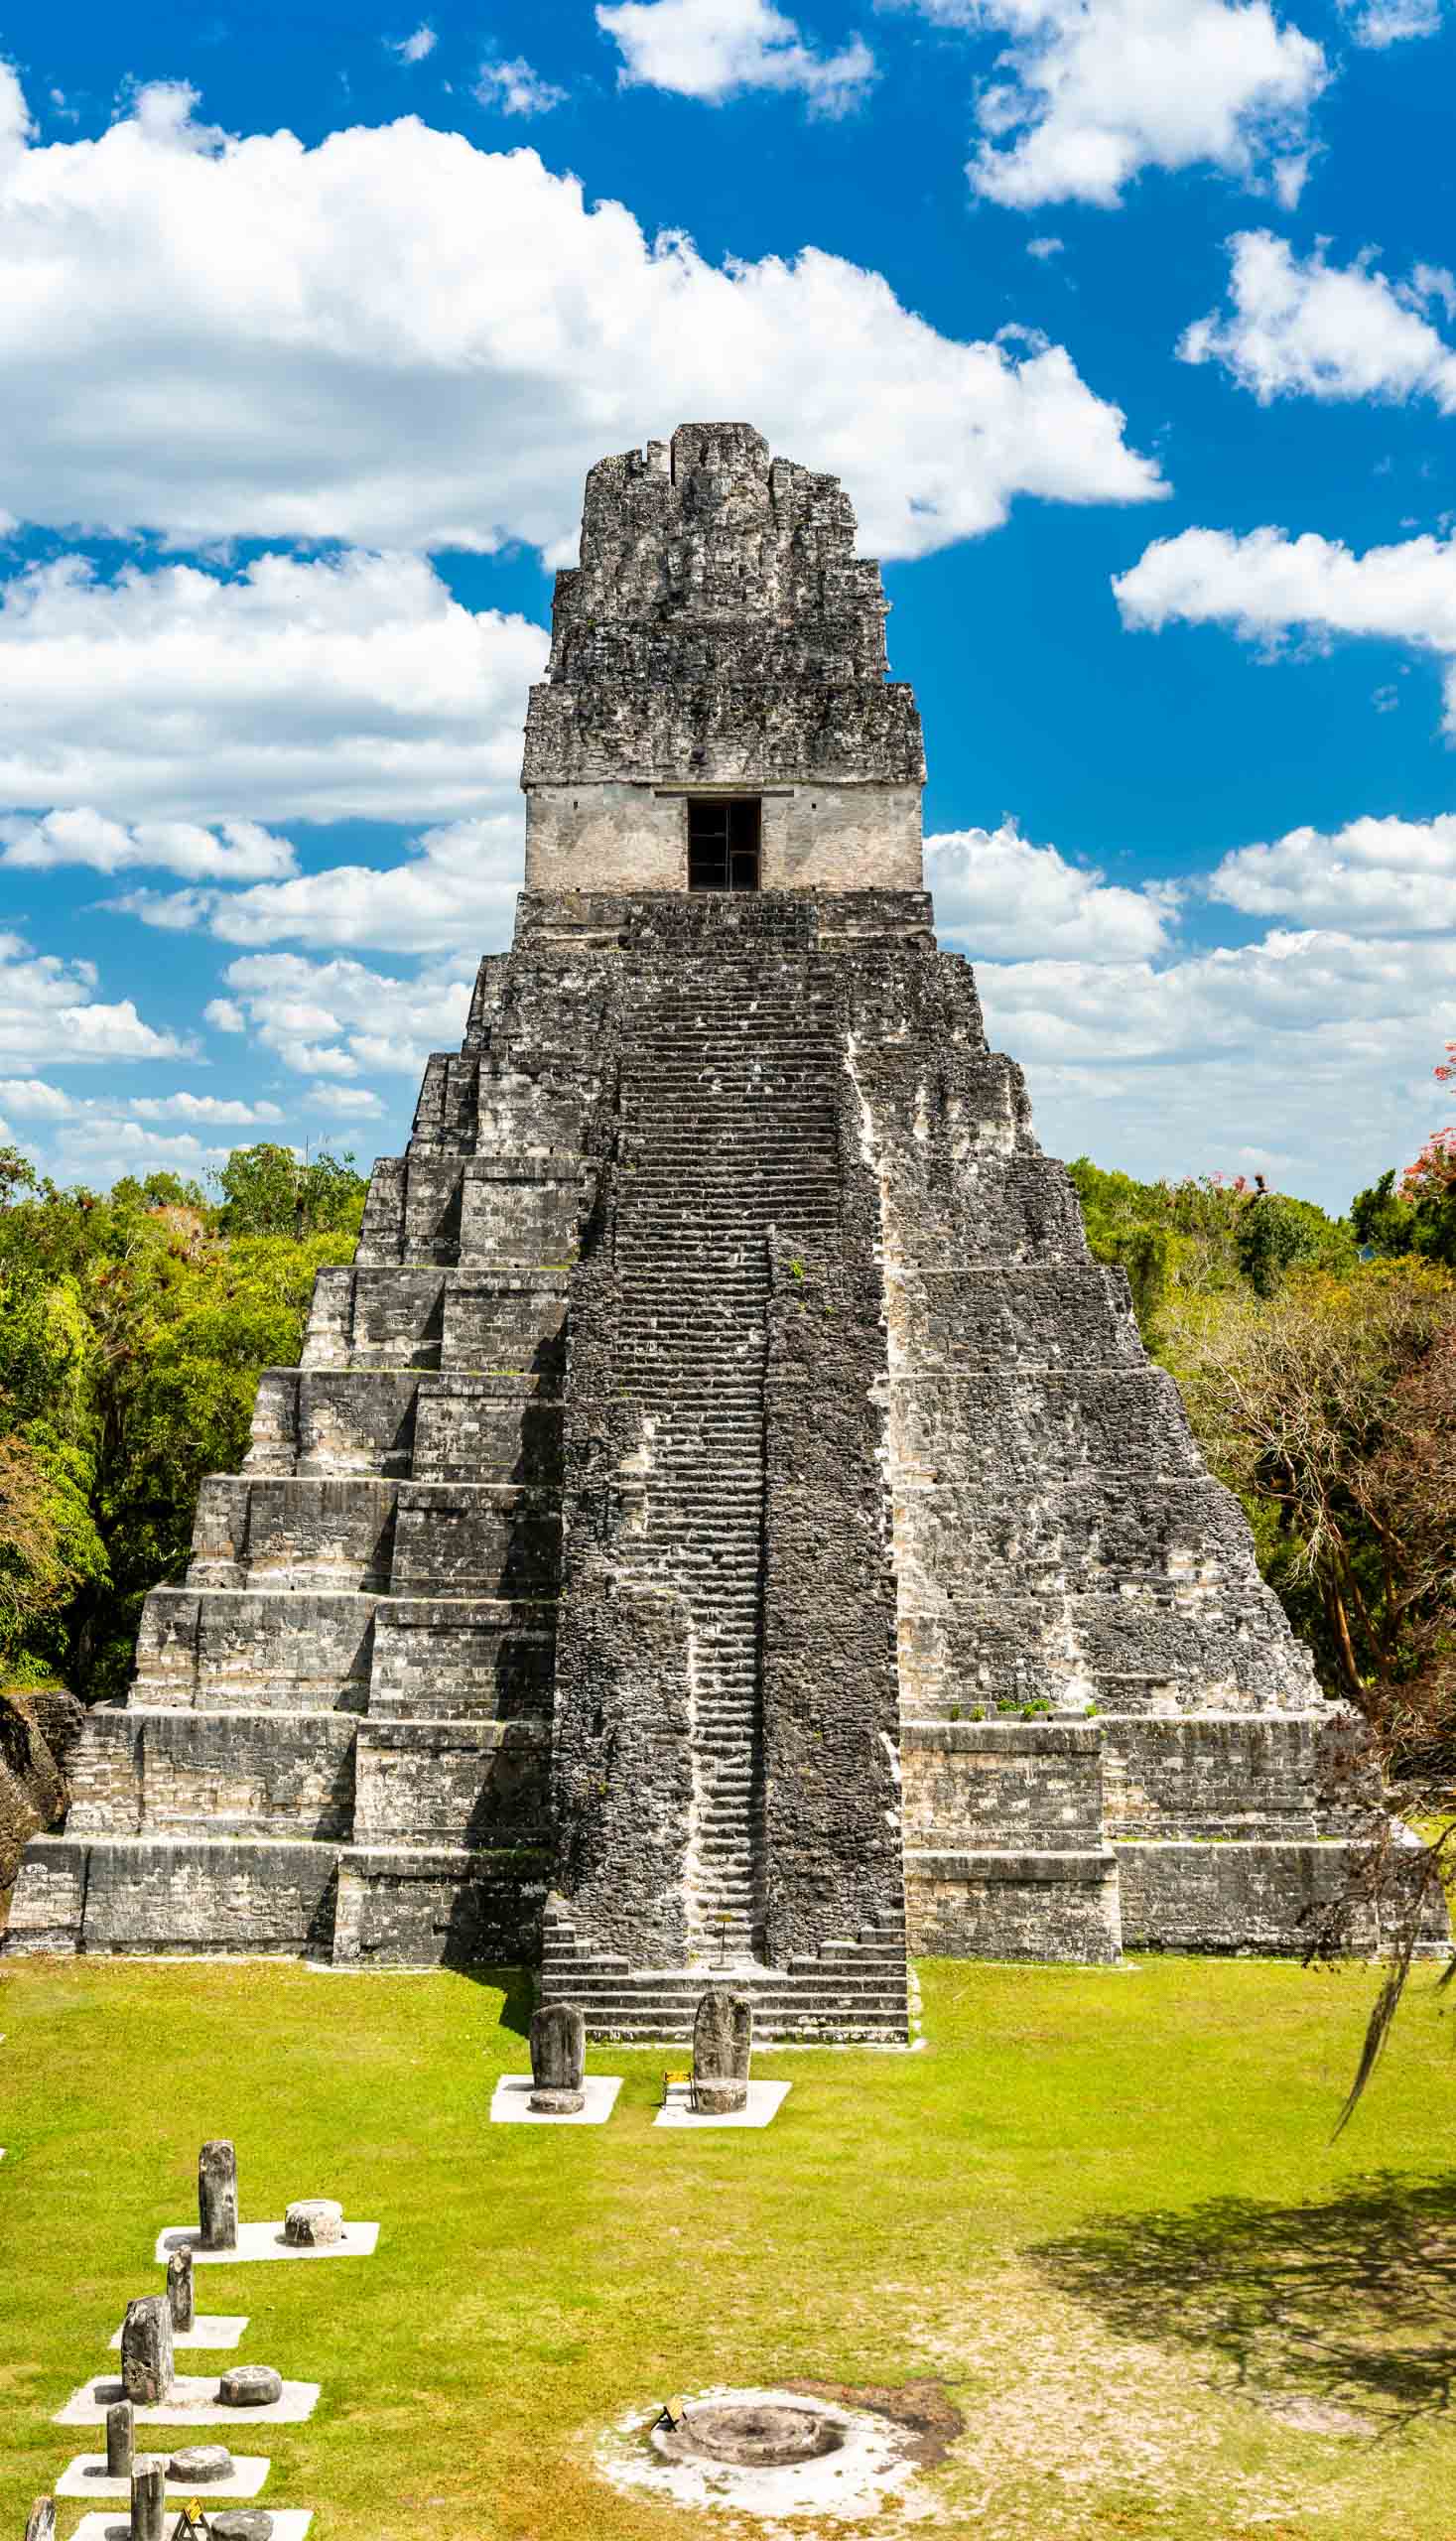 Temple of the Great Jaguar at Tikal.